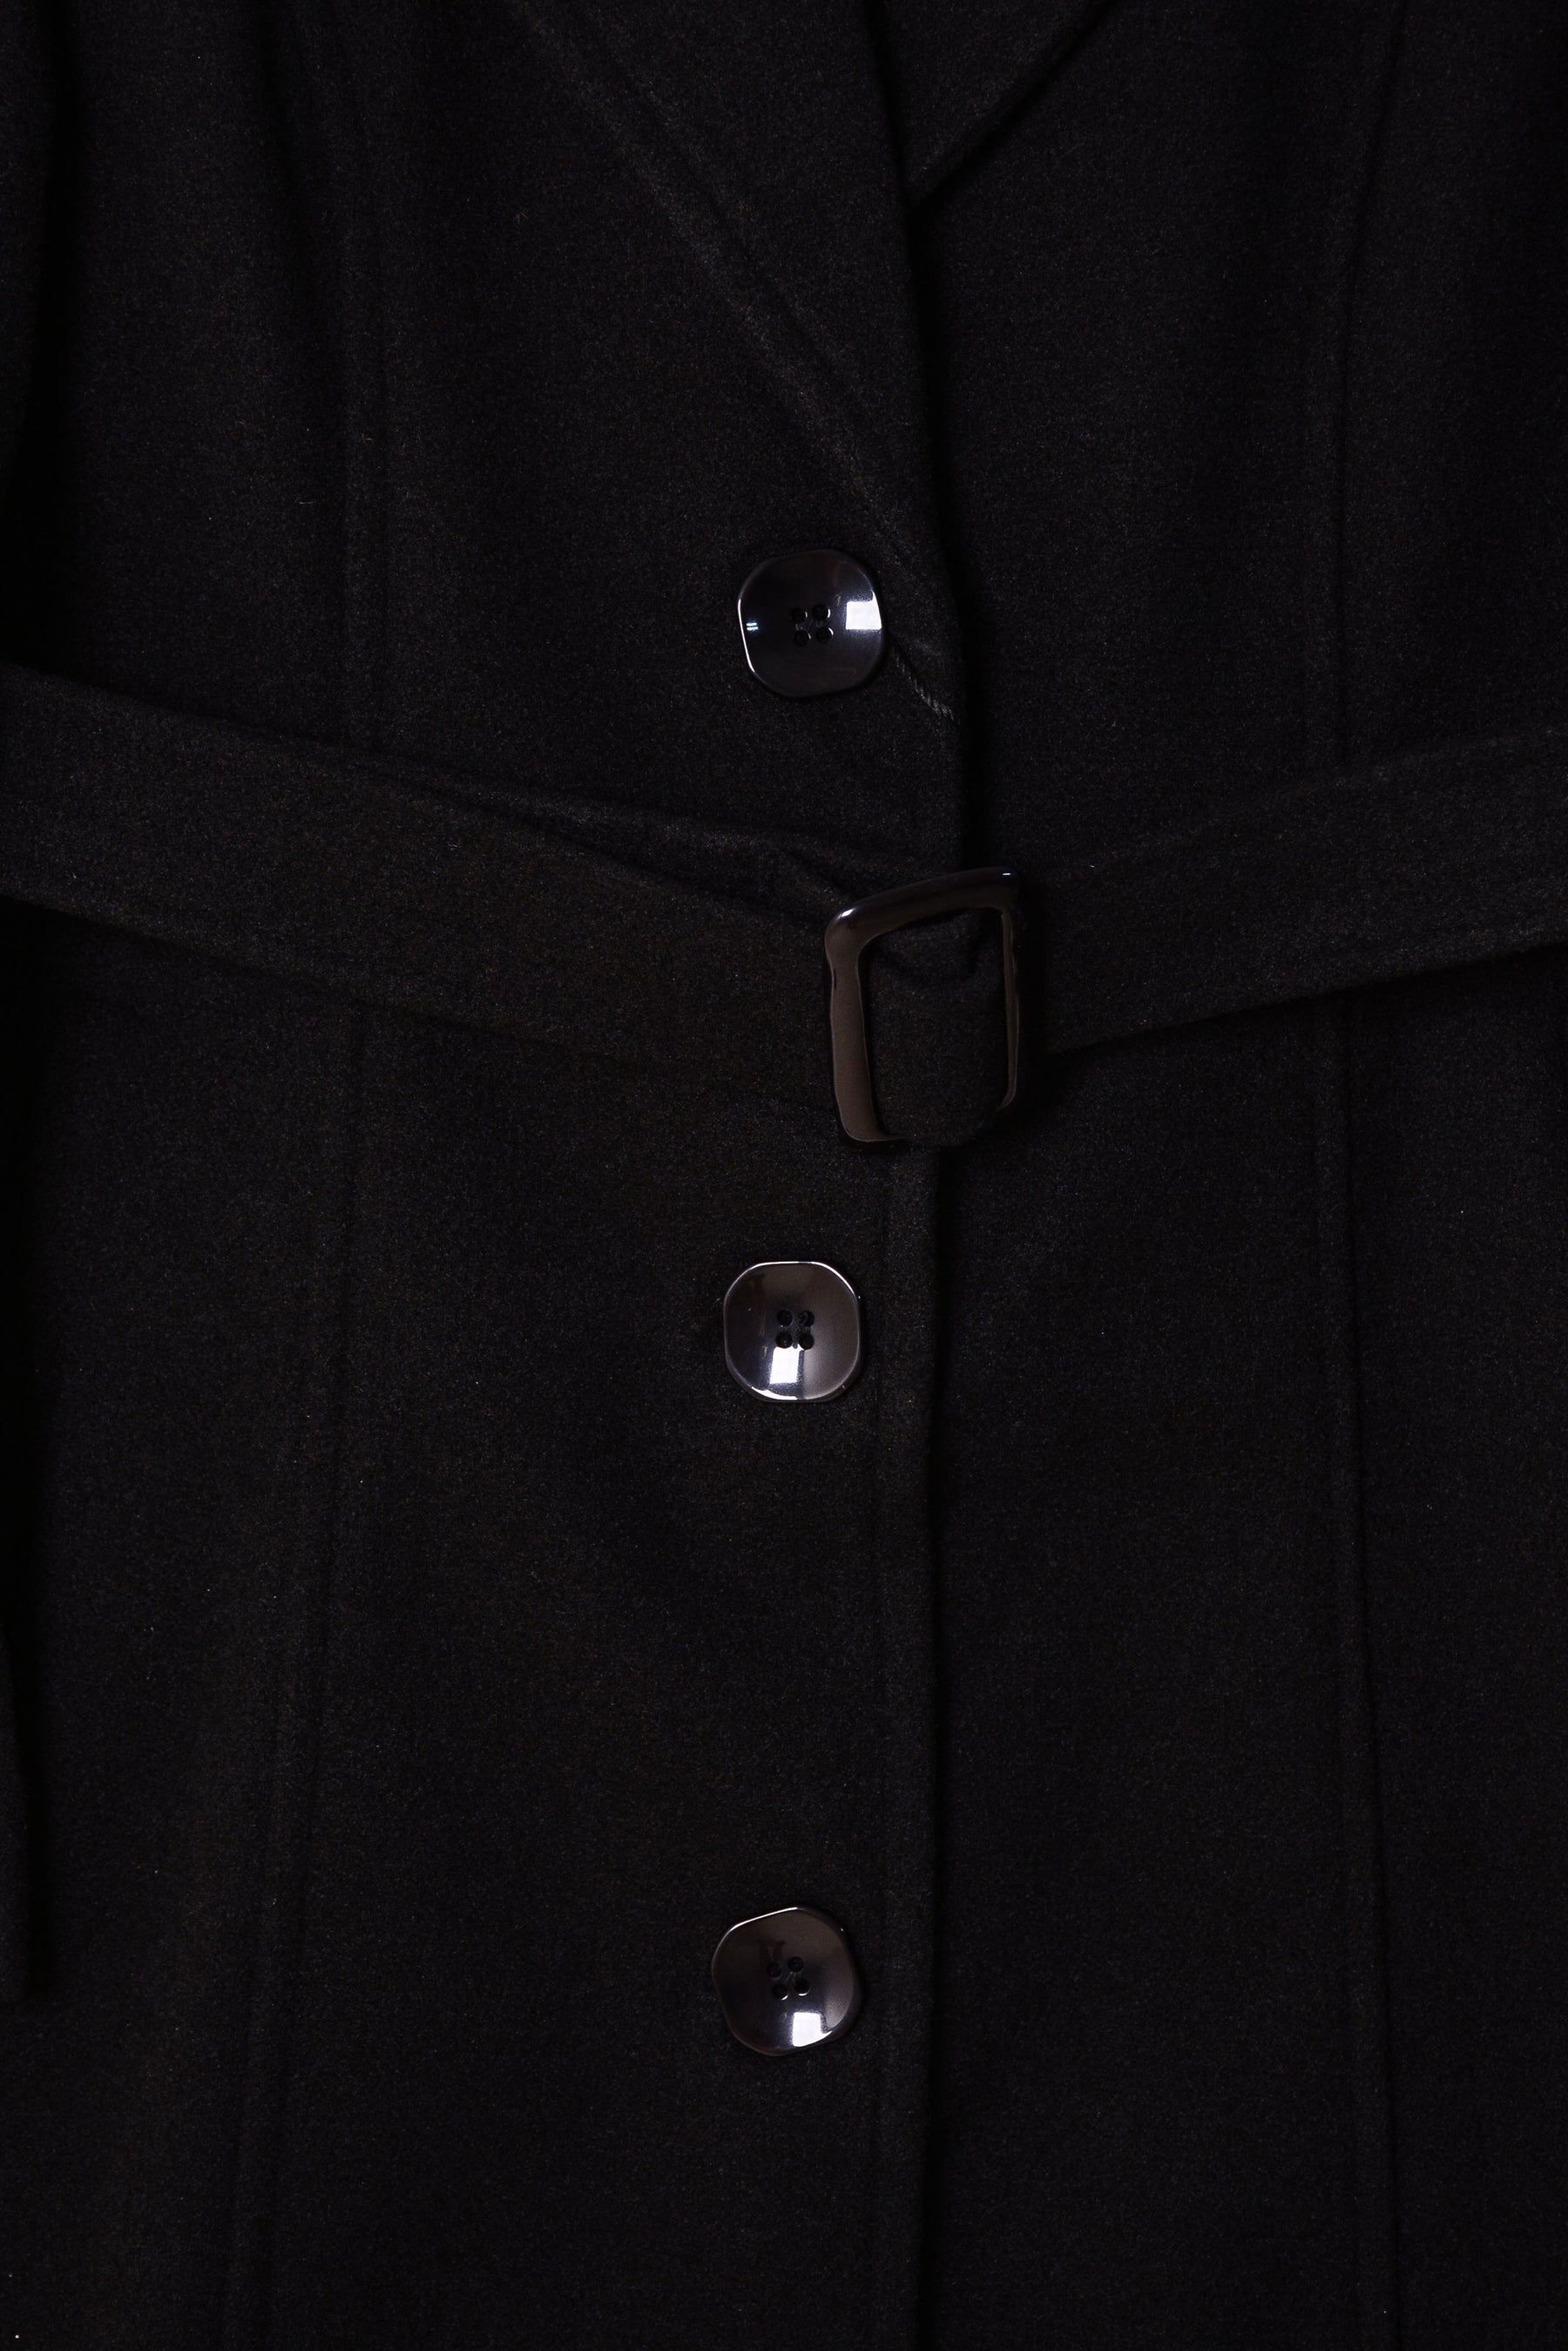 Ladies Winter Long Coats 18025-Black